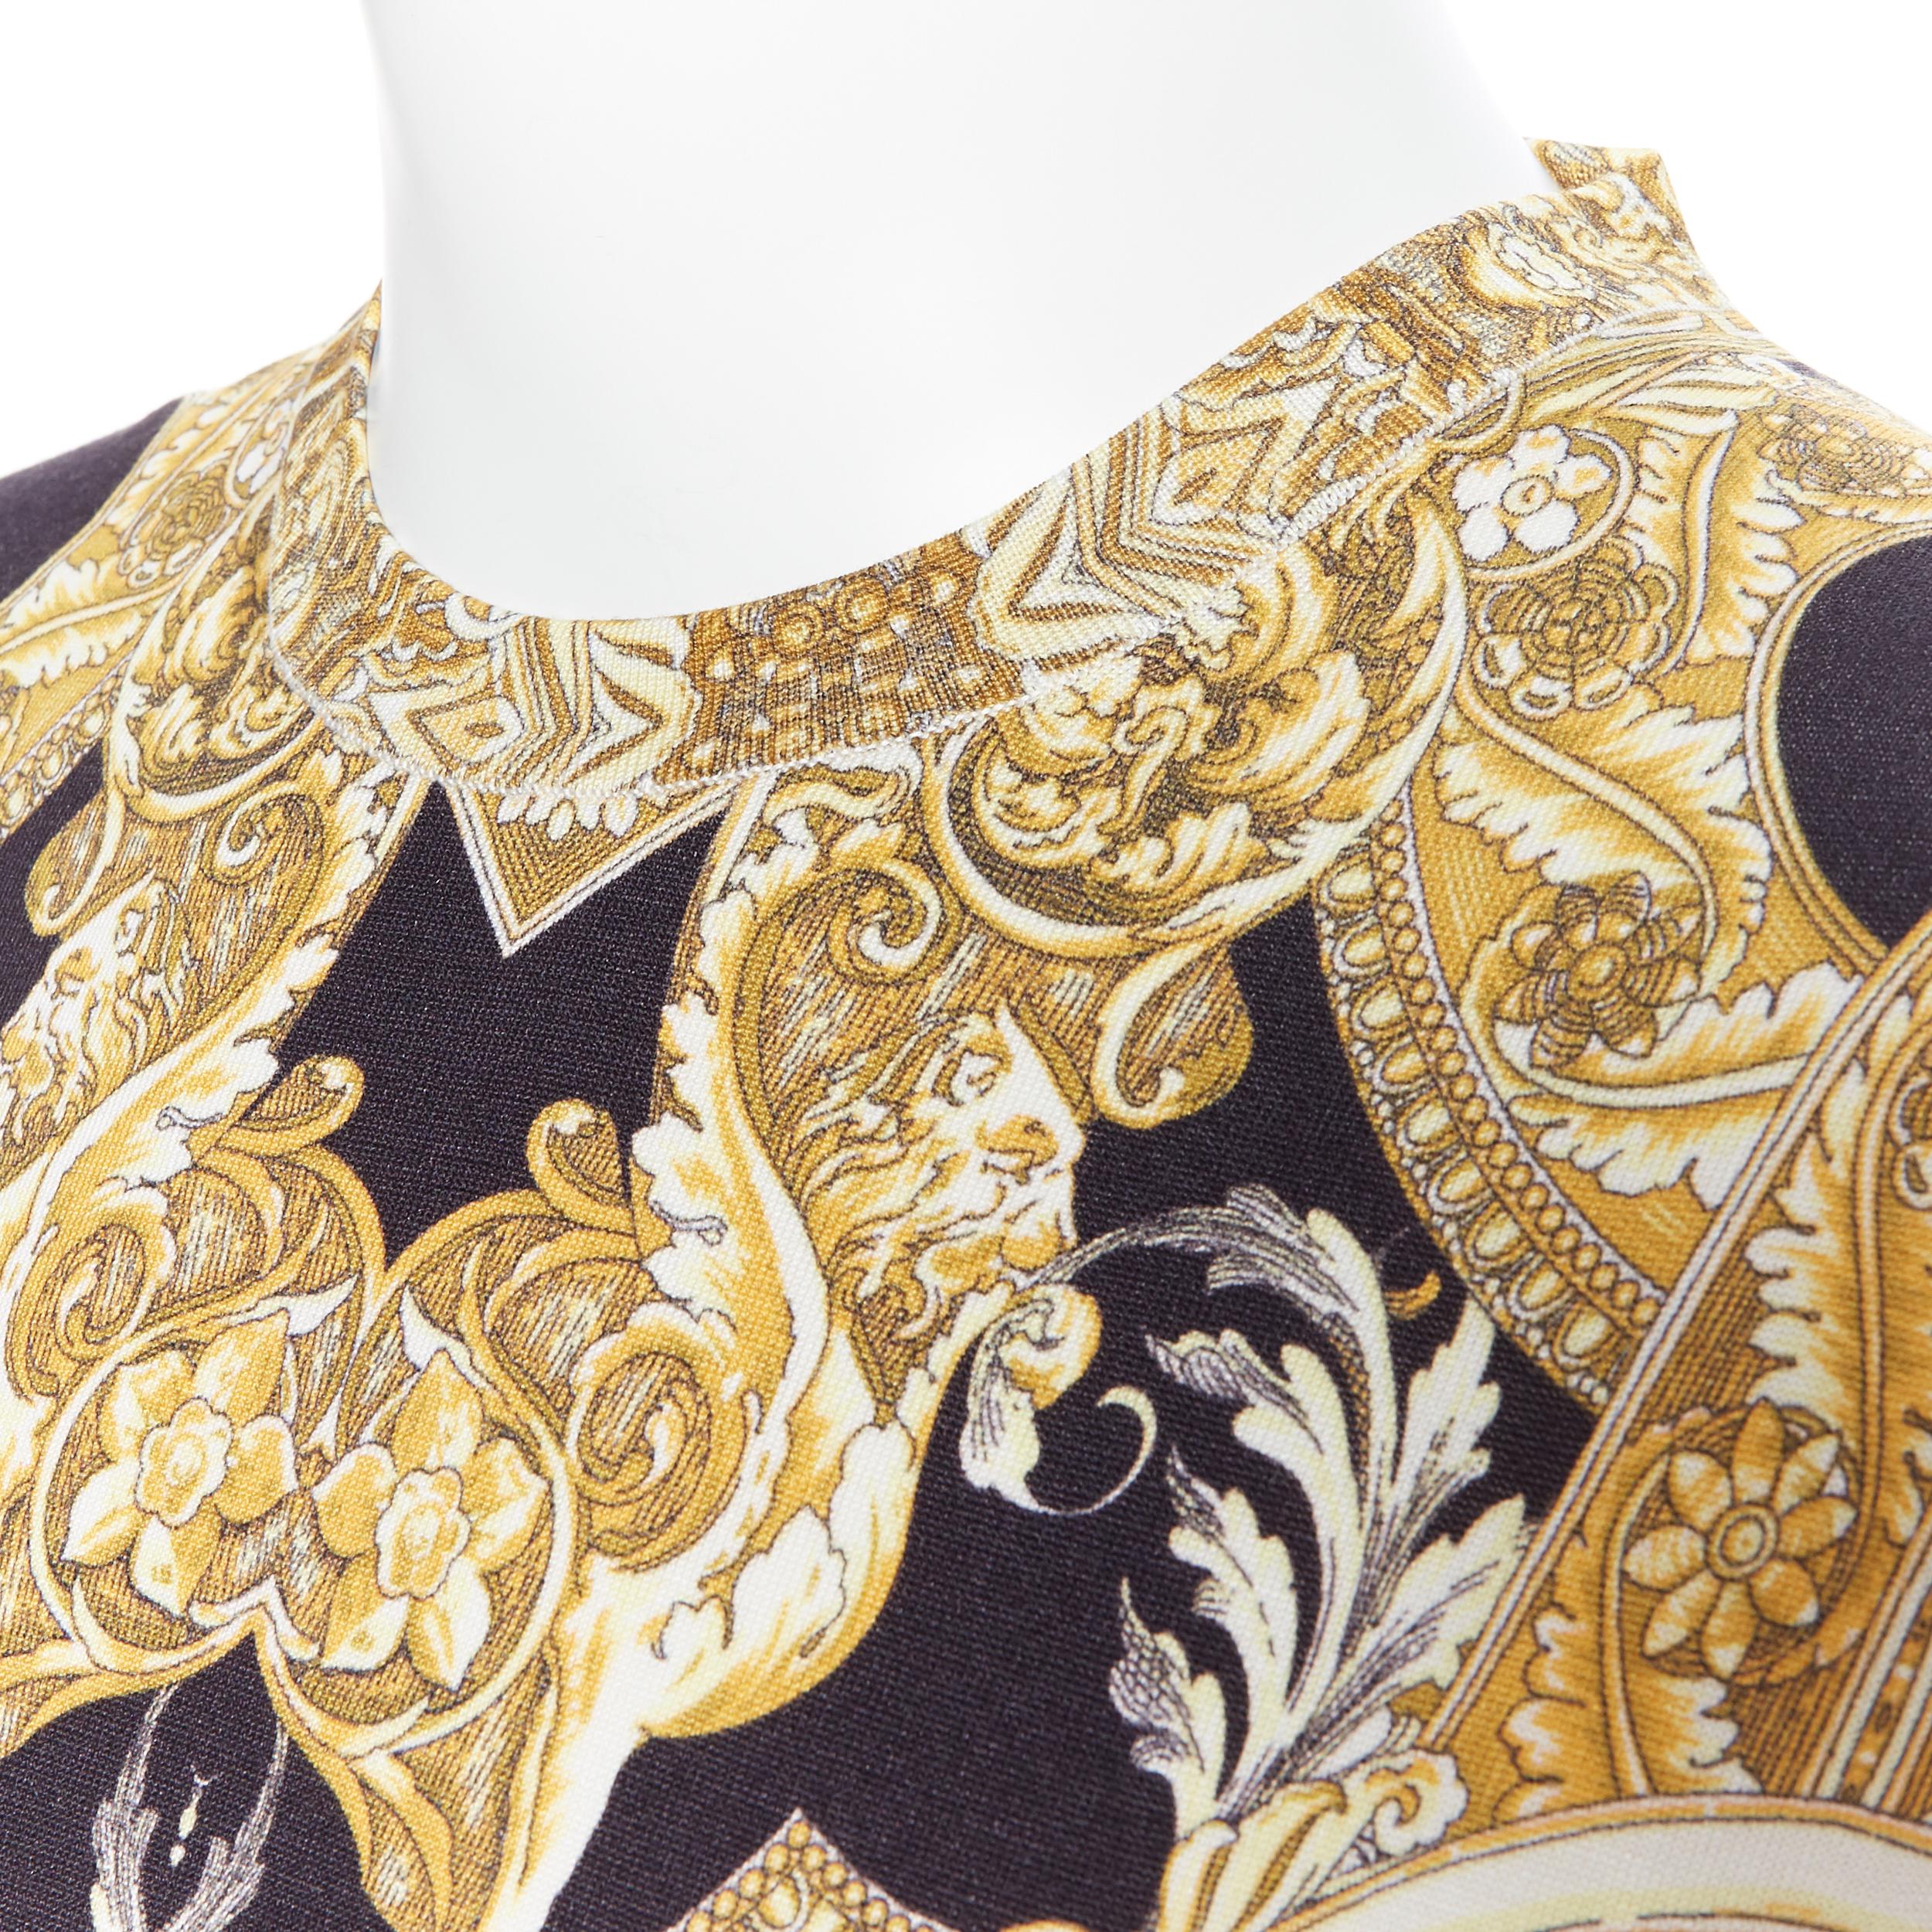 new VERSACE 100% silk signature black gold baroque rococo baroque sweater XXL
Brand: Versace
Designer: Donatella Versace
Collection: 2017
Model Name / Style: Silk sweater
Material: Silk
Color: Gold
Pattern: Other; signature Versace rococo